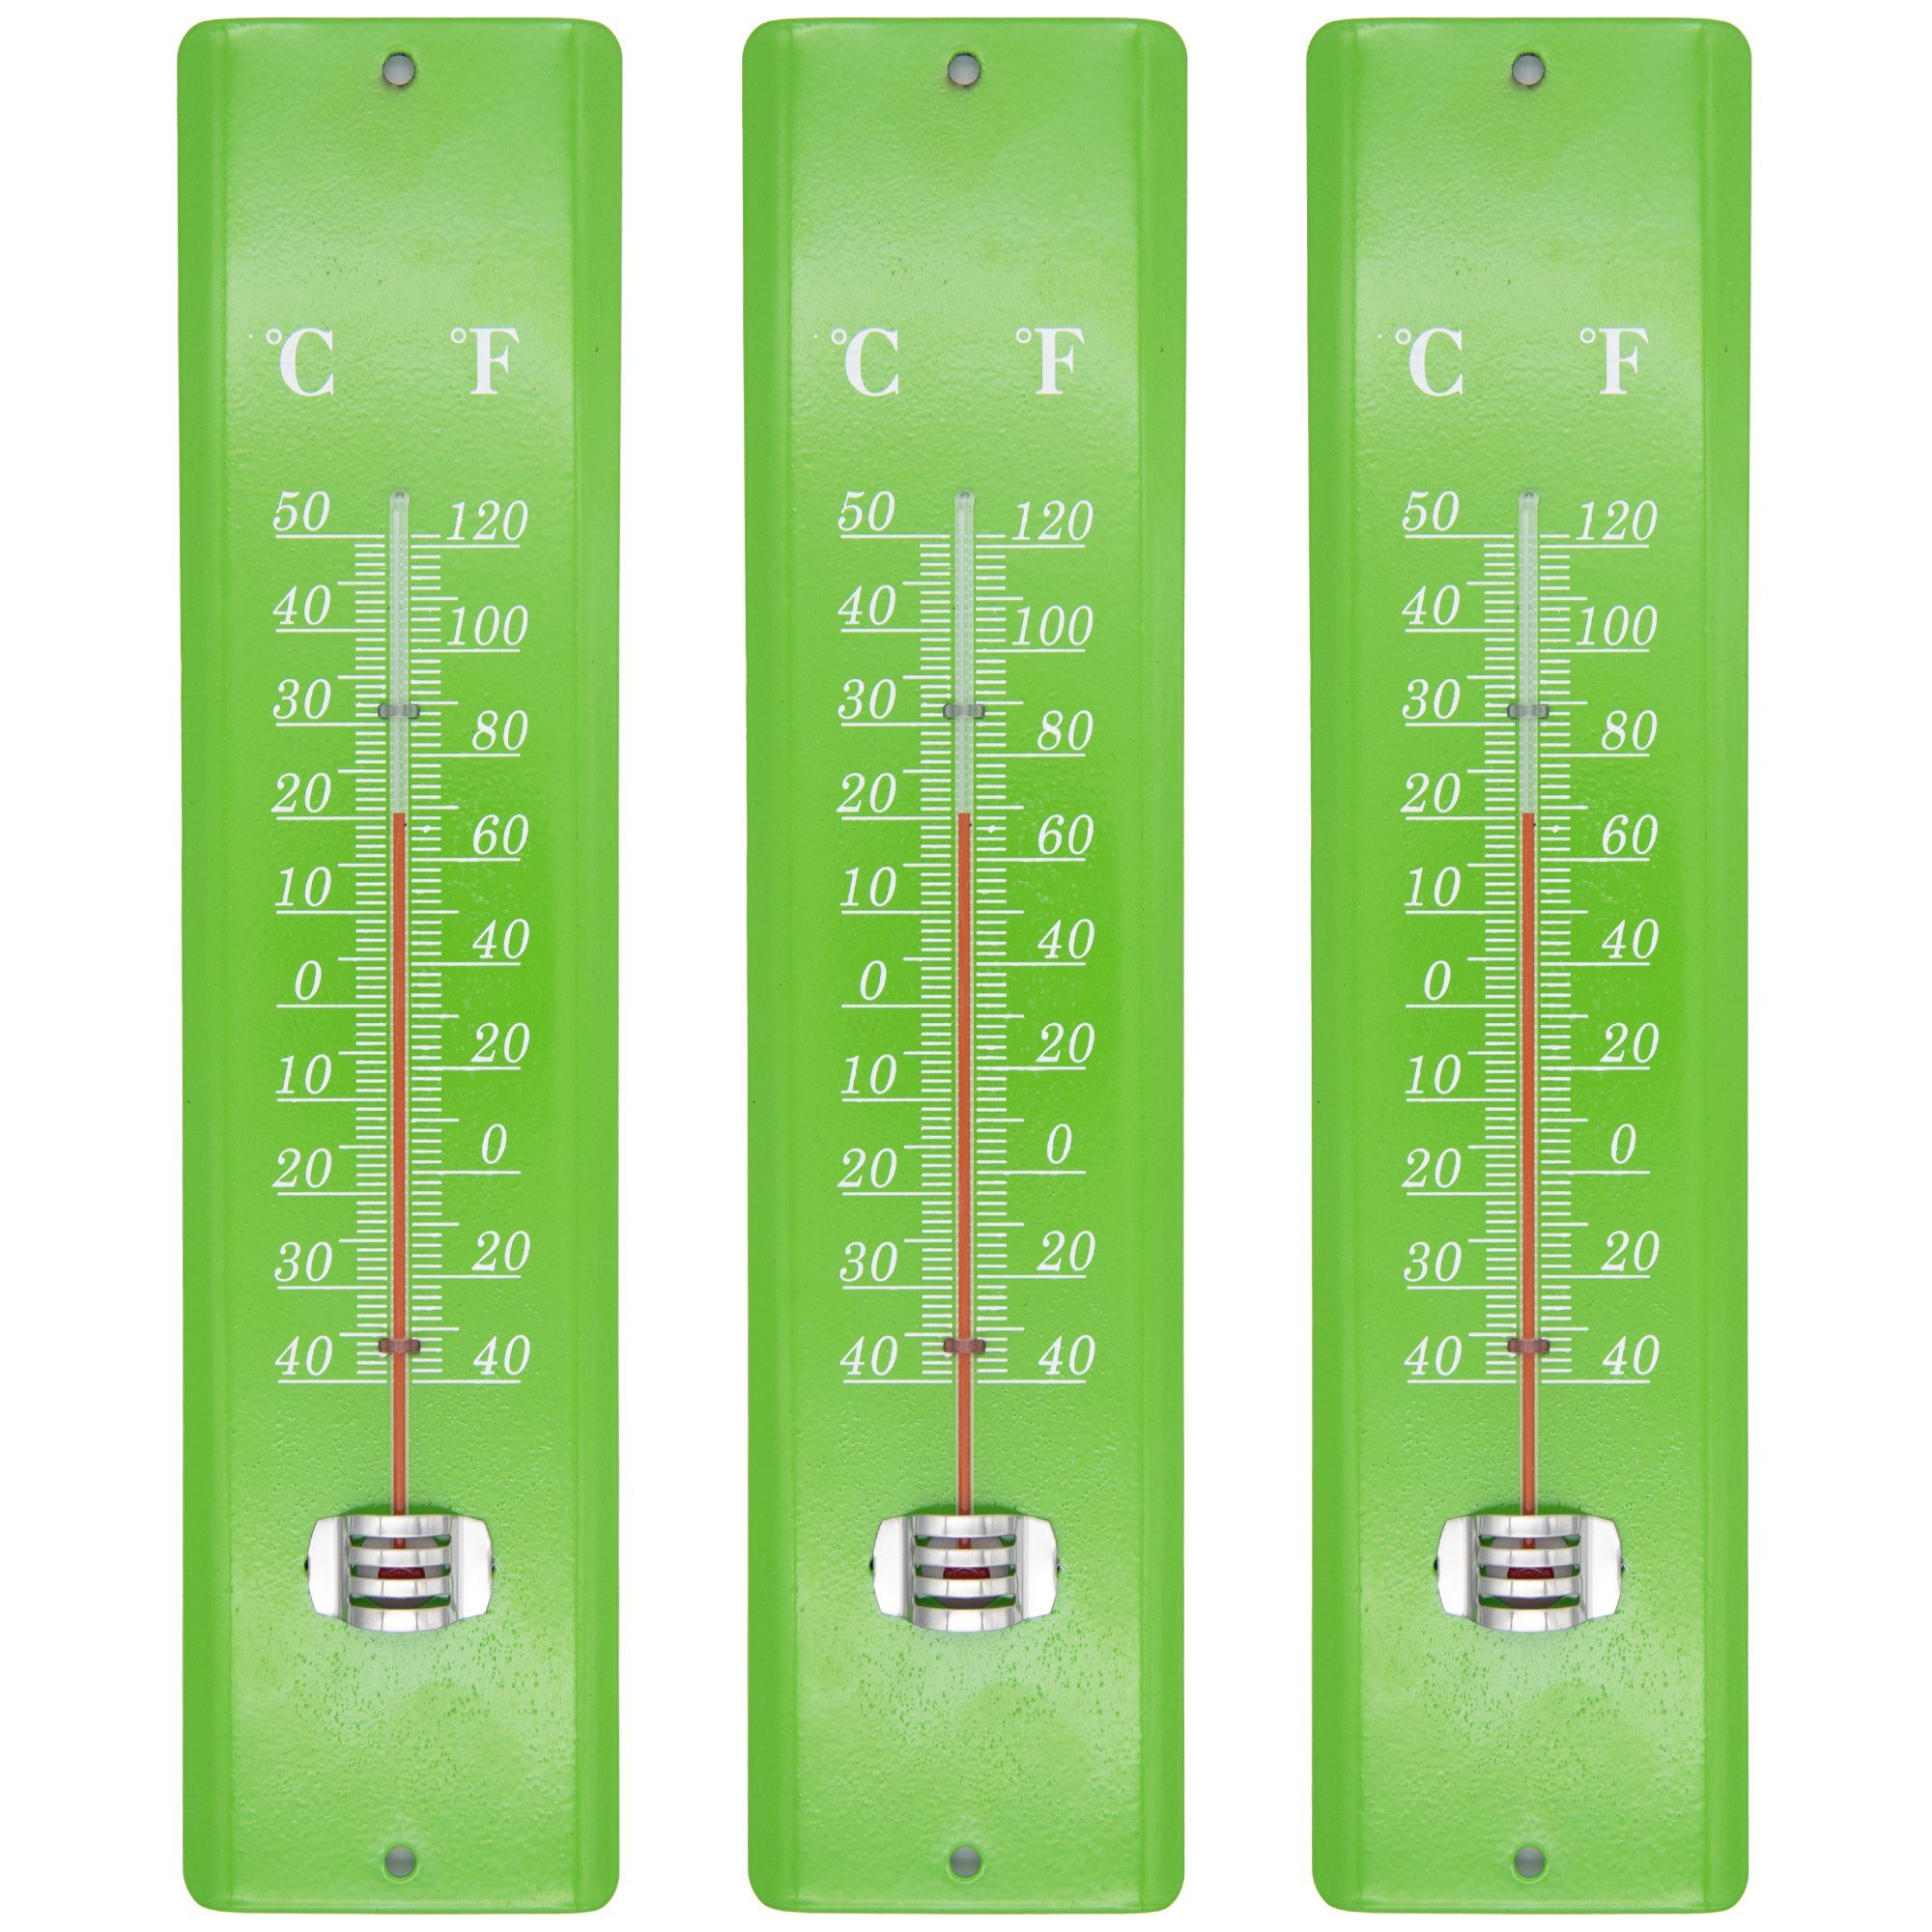 https://i.otto.de/i/otto/be96883b-1ae8-589e-b10f-eb1d54cdd820/benson-raumthermometer-3x-thermometer-innenthermometer-aussenthermometer-innen-aussen-metall-gross-xl.jpg?$formatz$